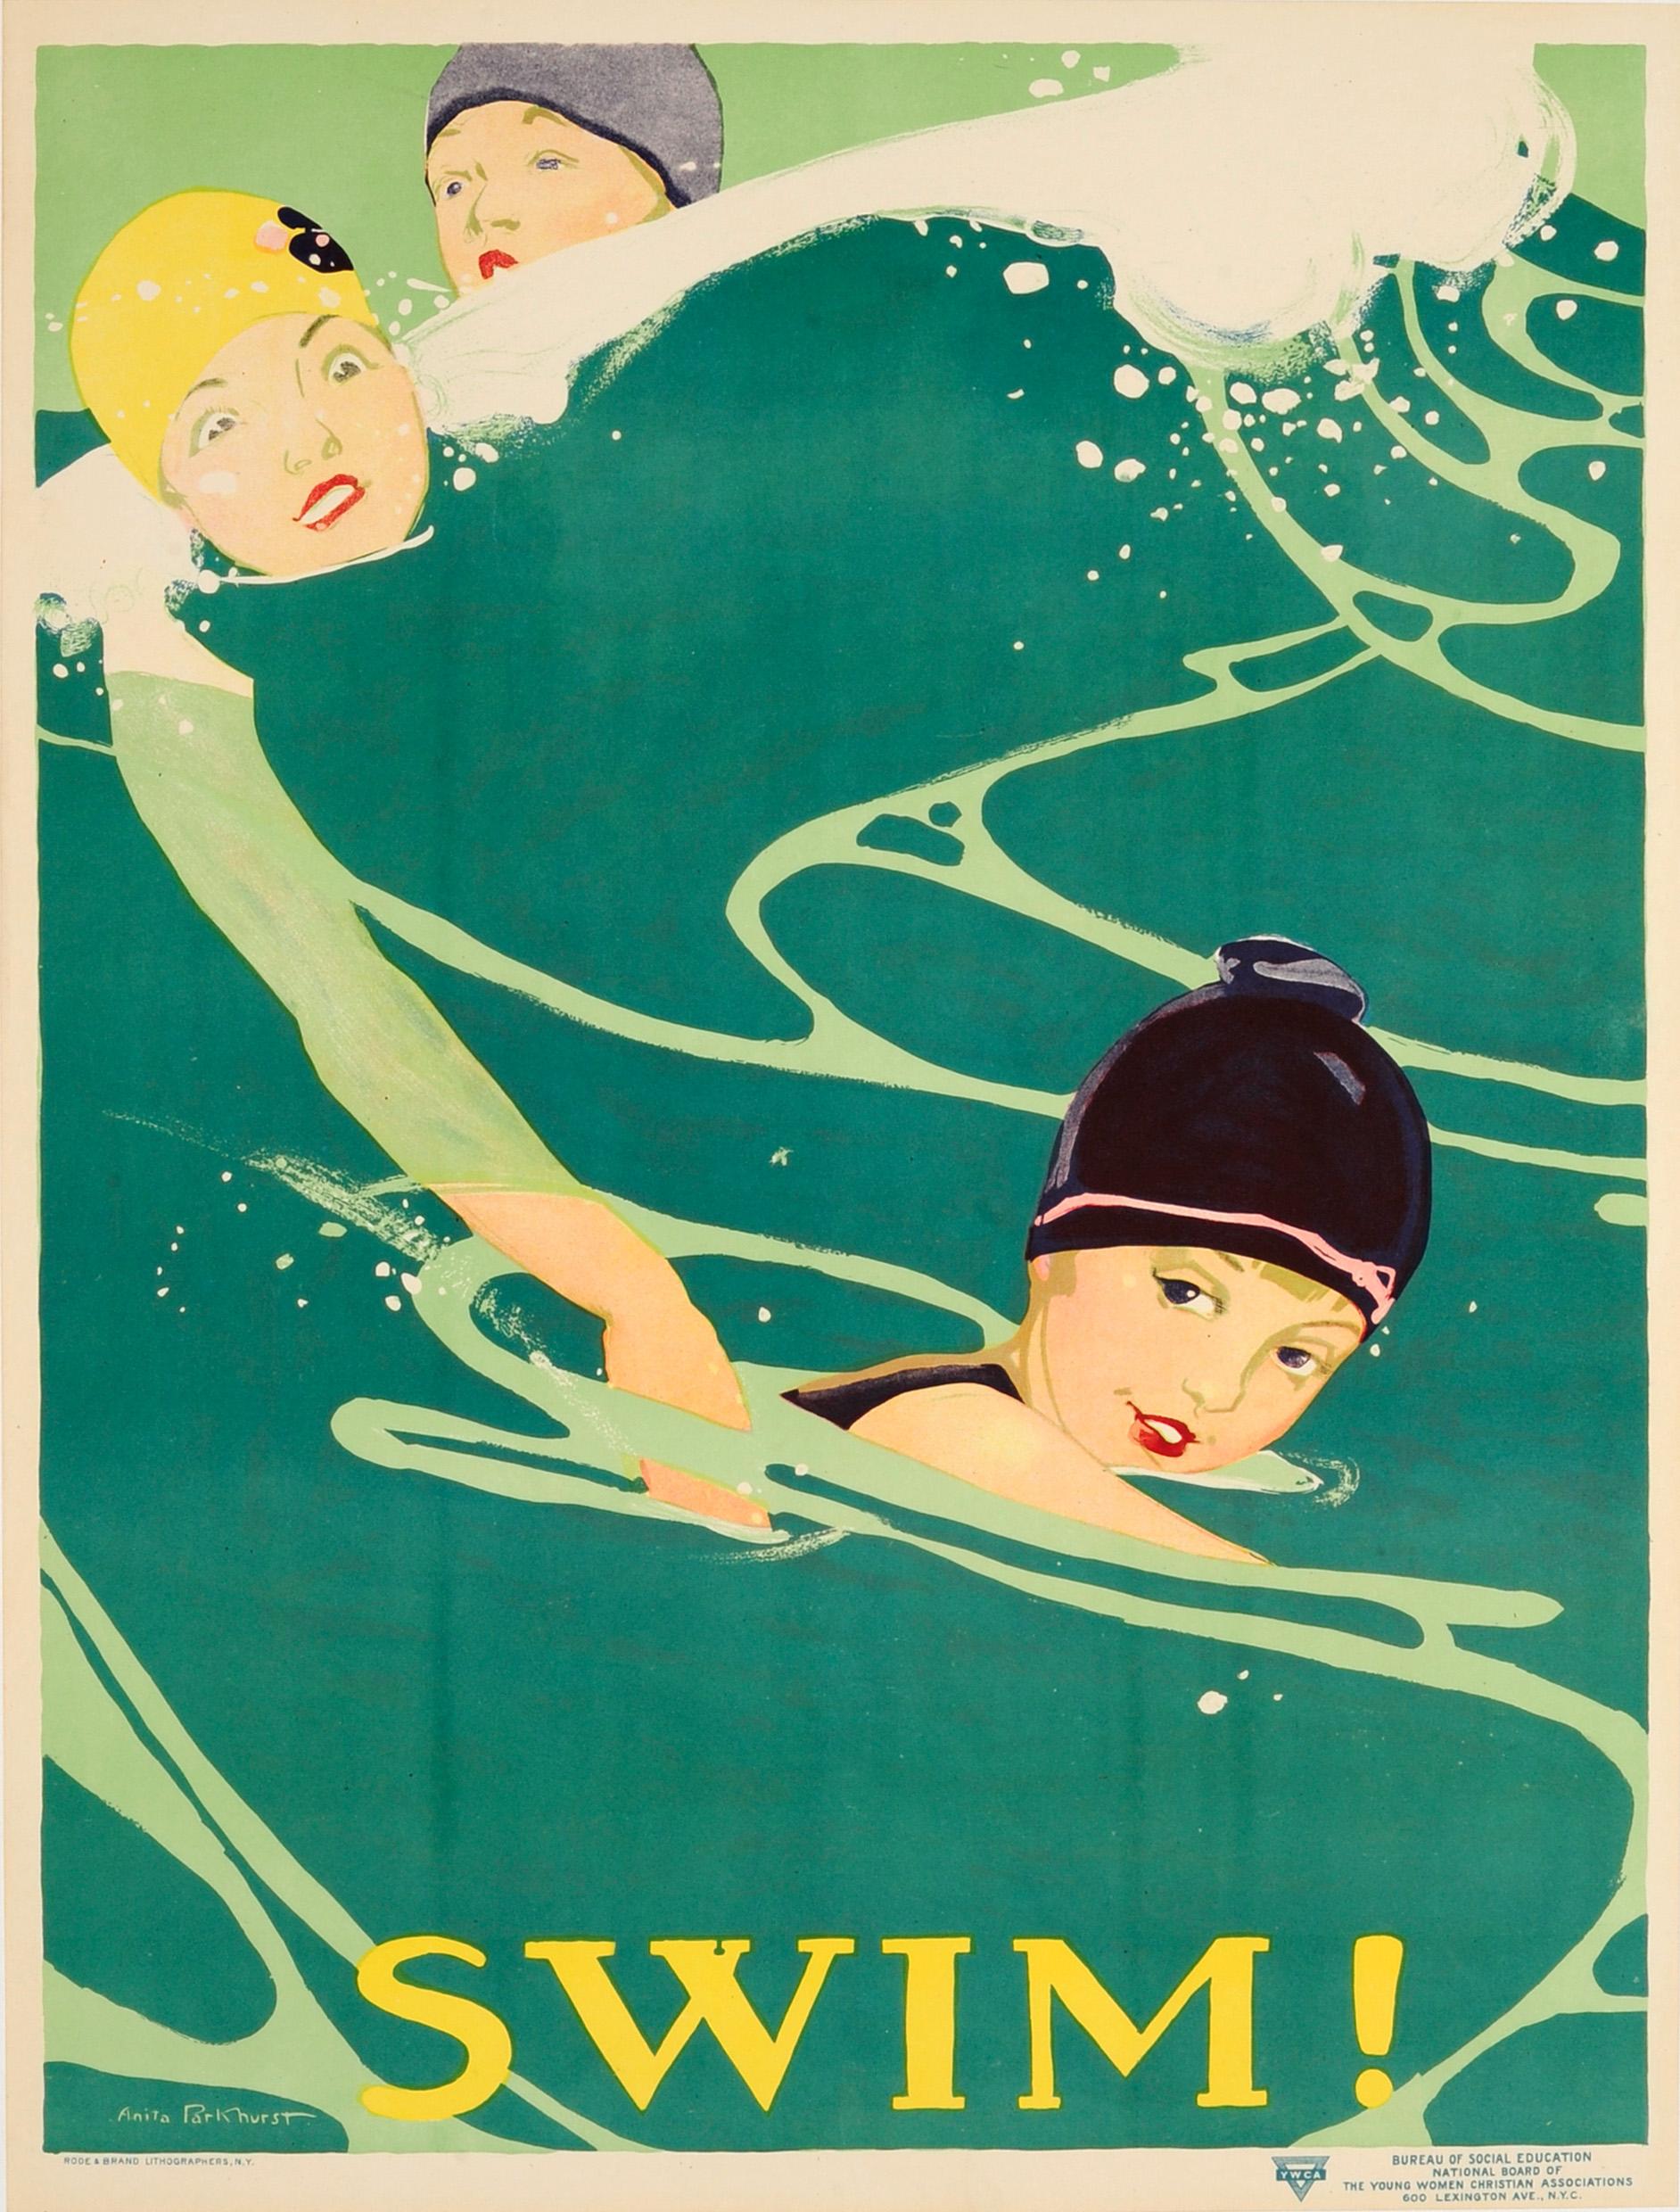 Anita Parkhurst Print - Original Vintage Sport Poster - Swim - Social Education National Board YWCA